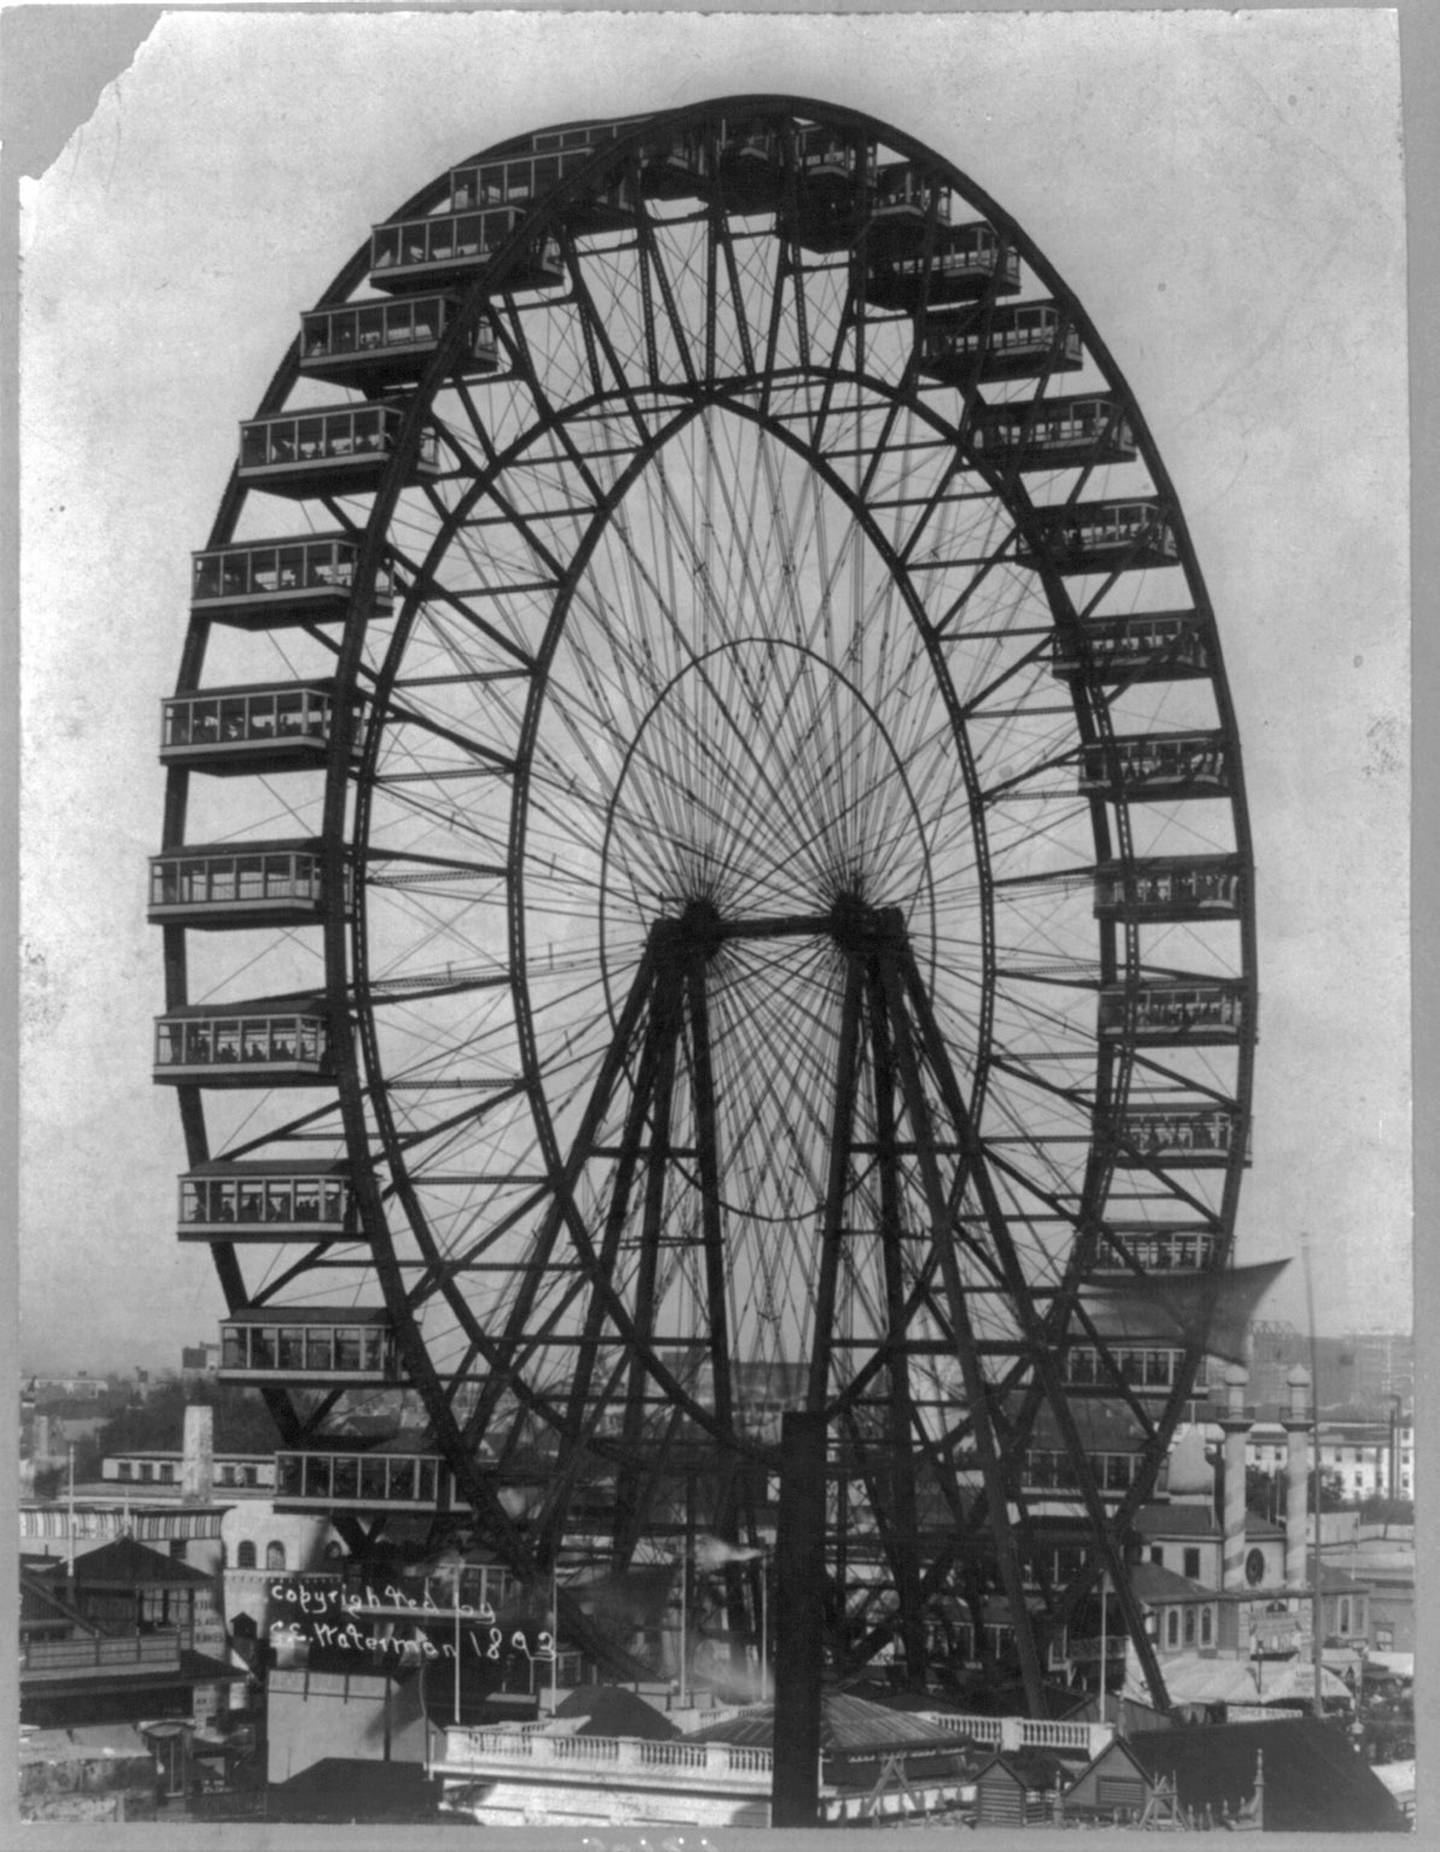 The Ferris wheel at the Chicago world’s fair, 1893